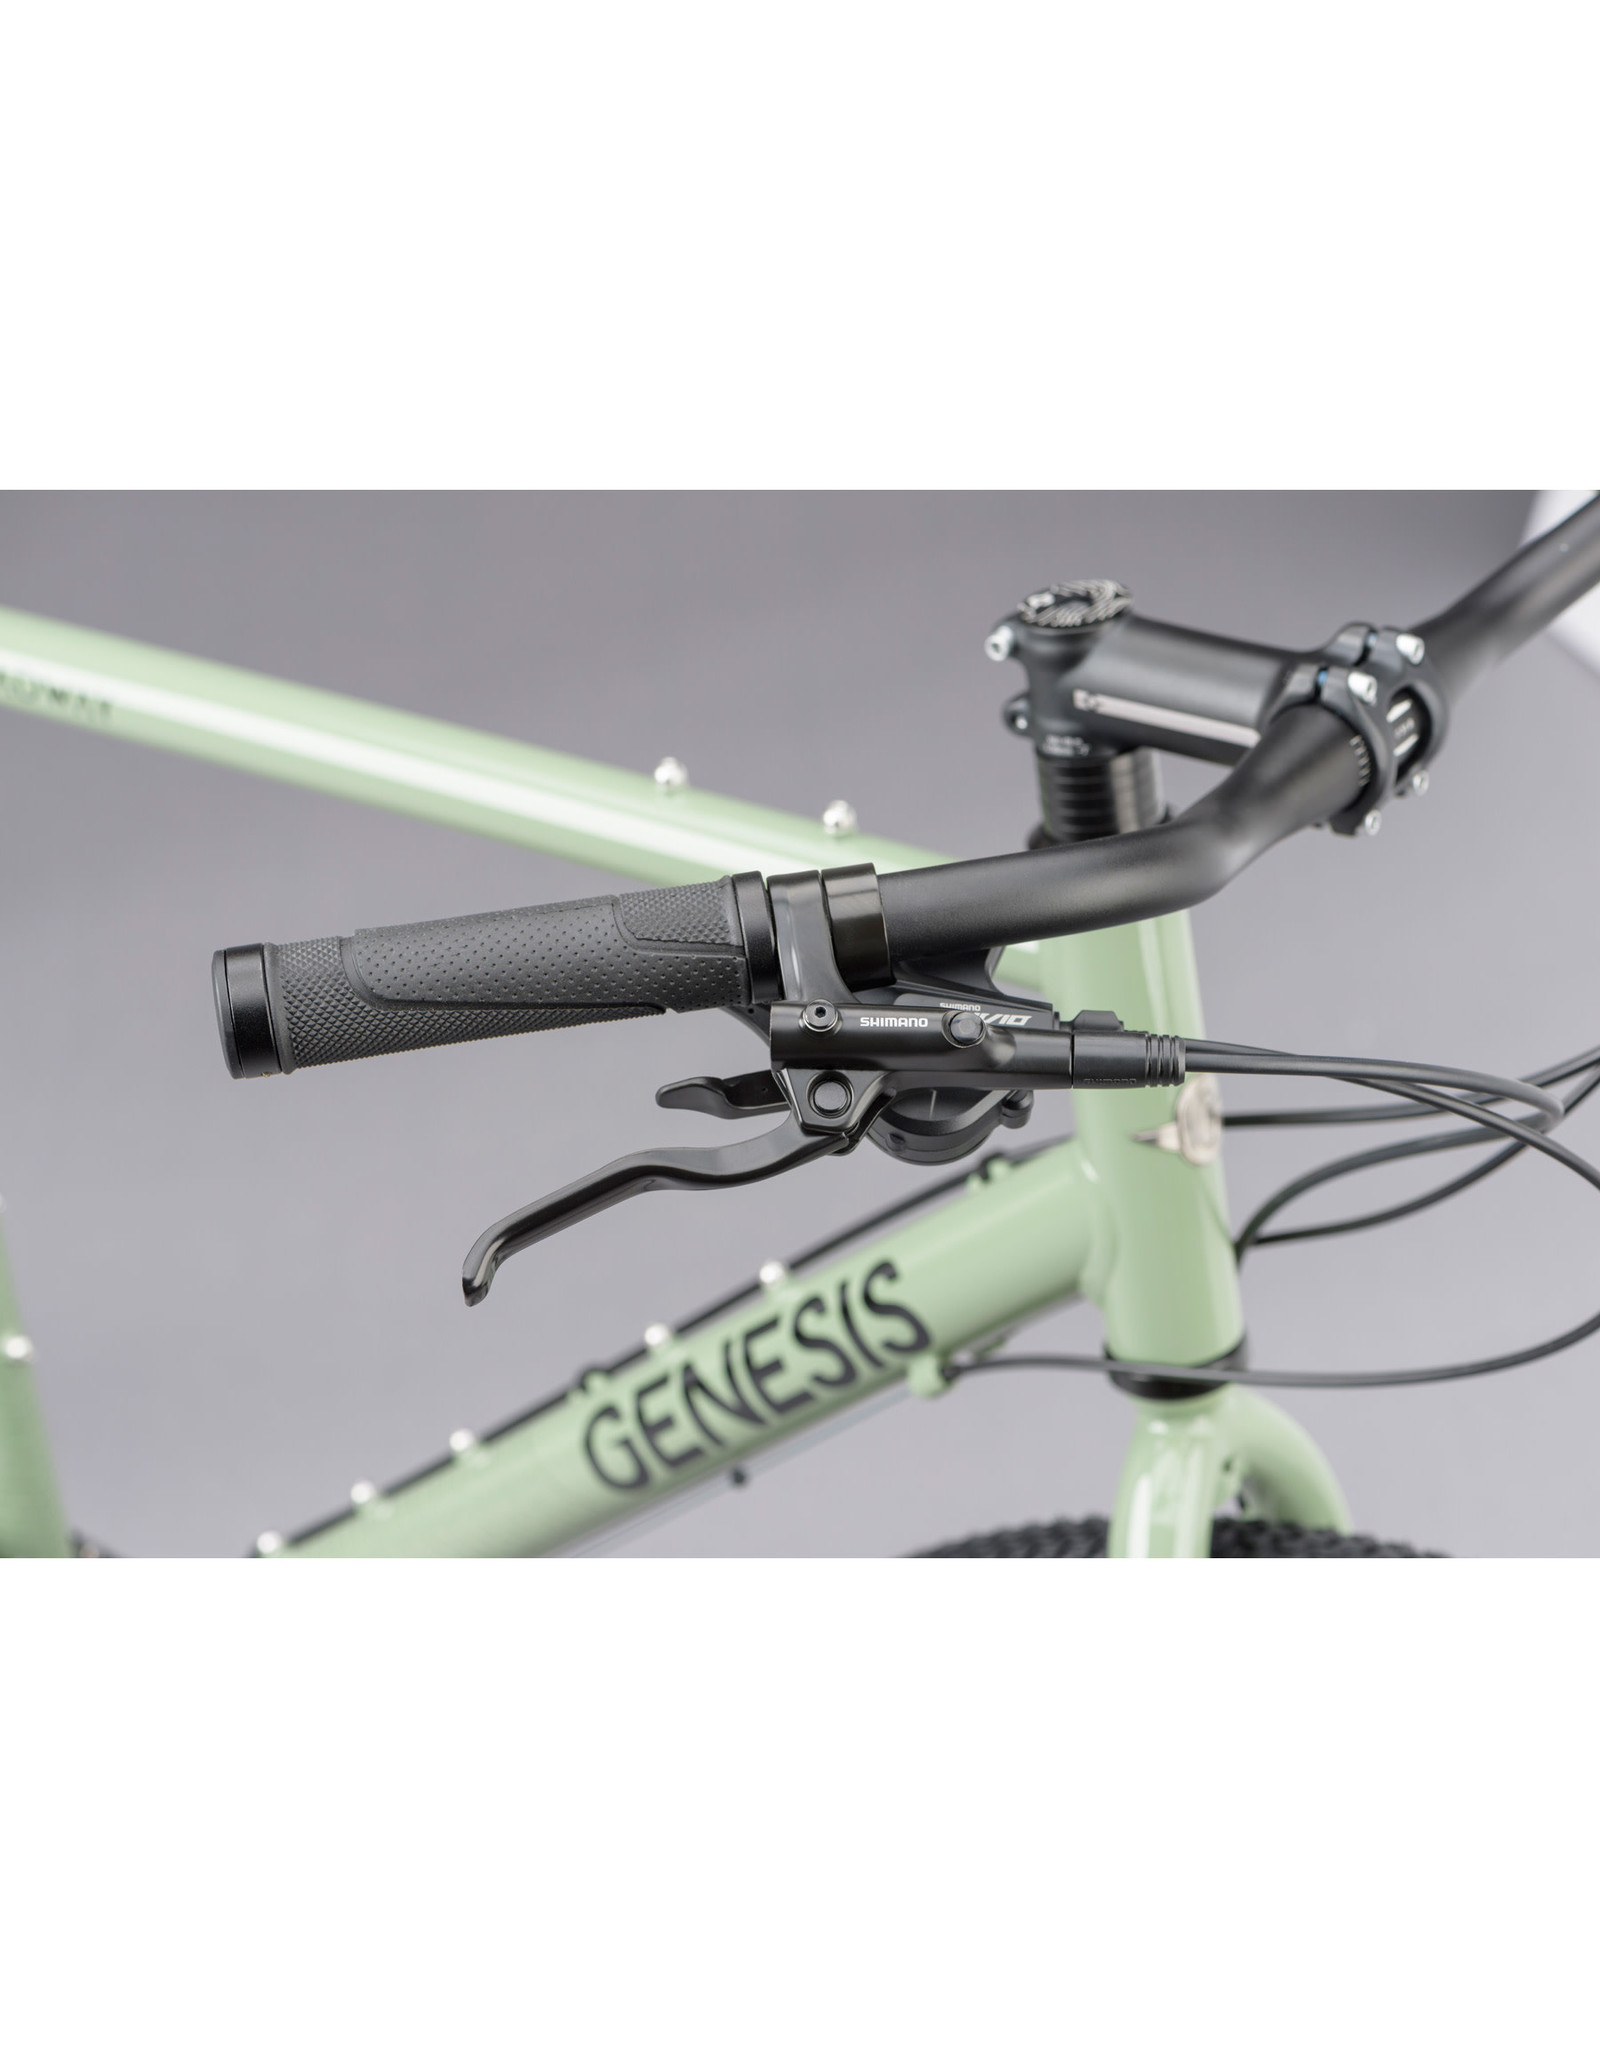 Genesis Broadway Hybrid Bike 2021